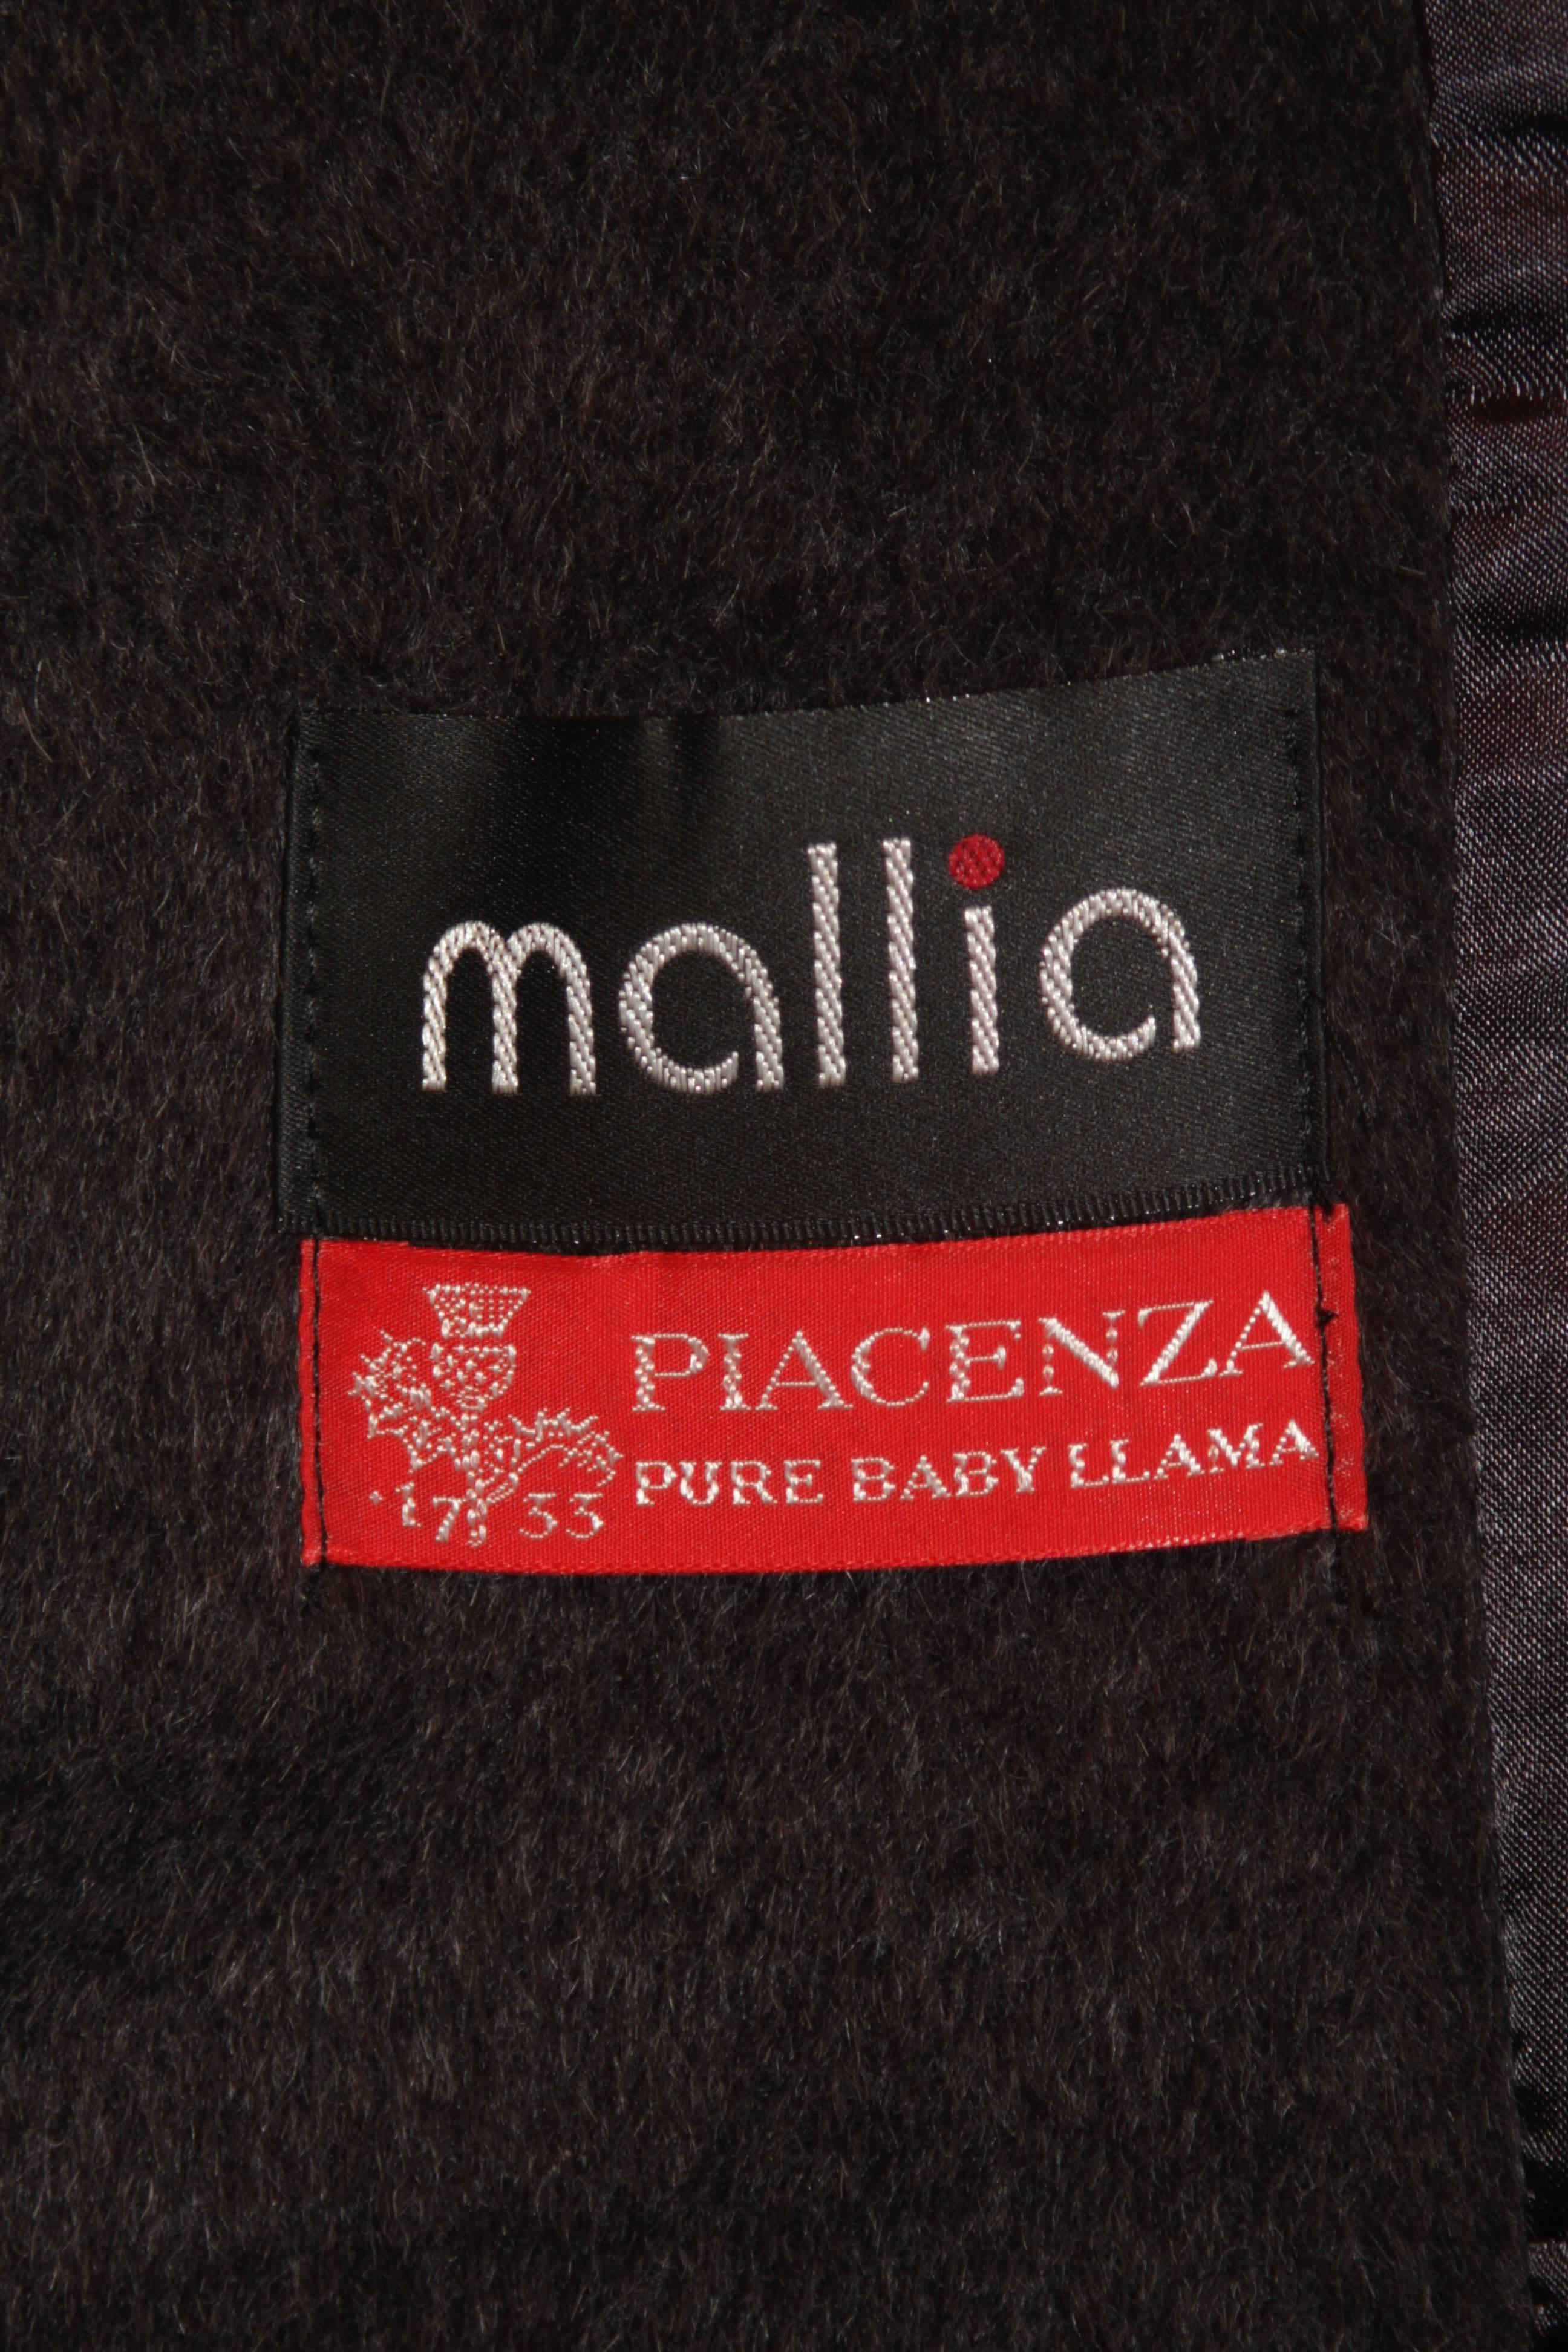 MALLIA PIACENZA Grey Baby Llama Coat with Fox Fur Tassels Size 8 2